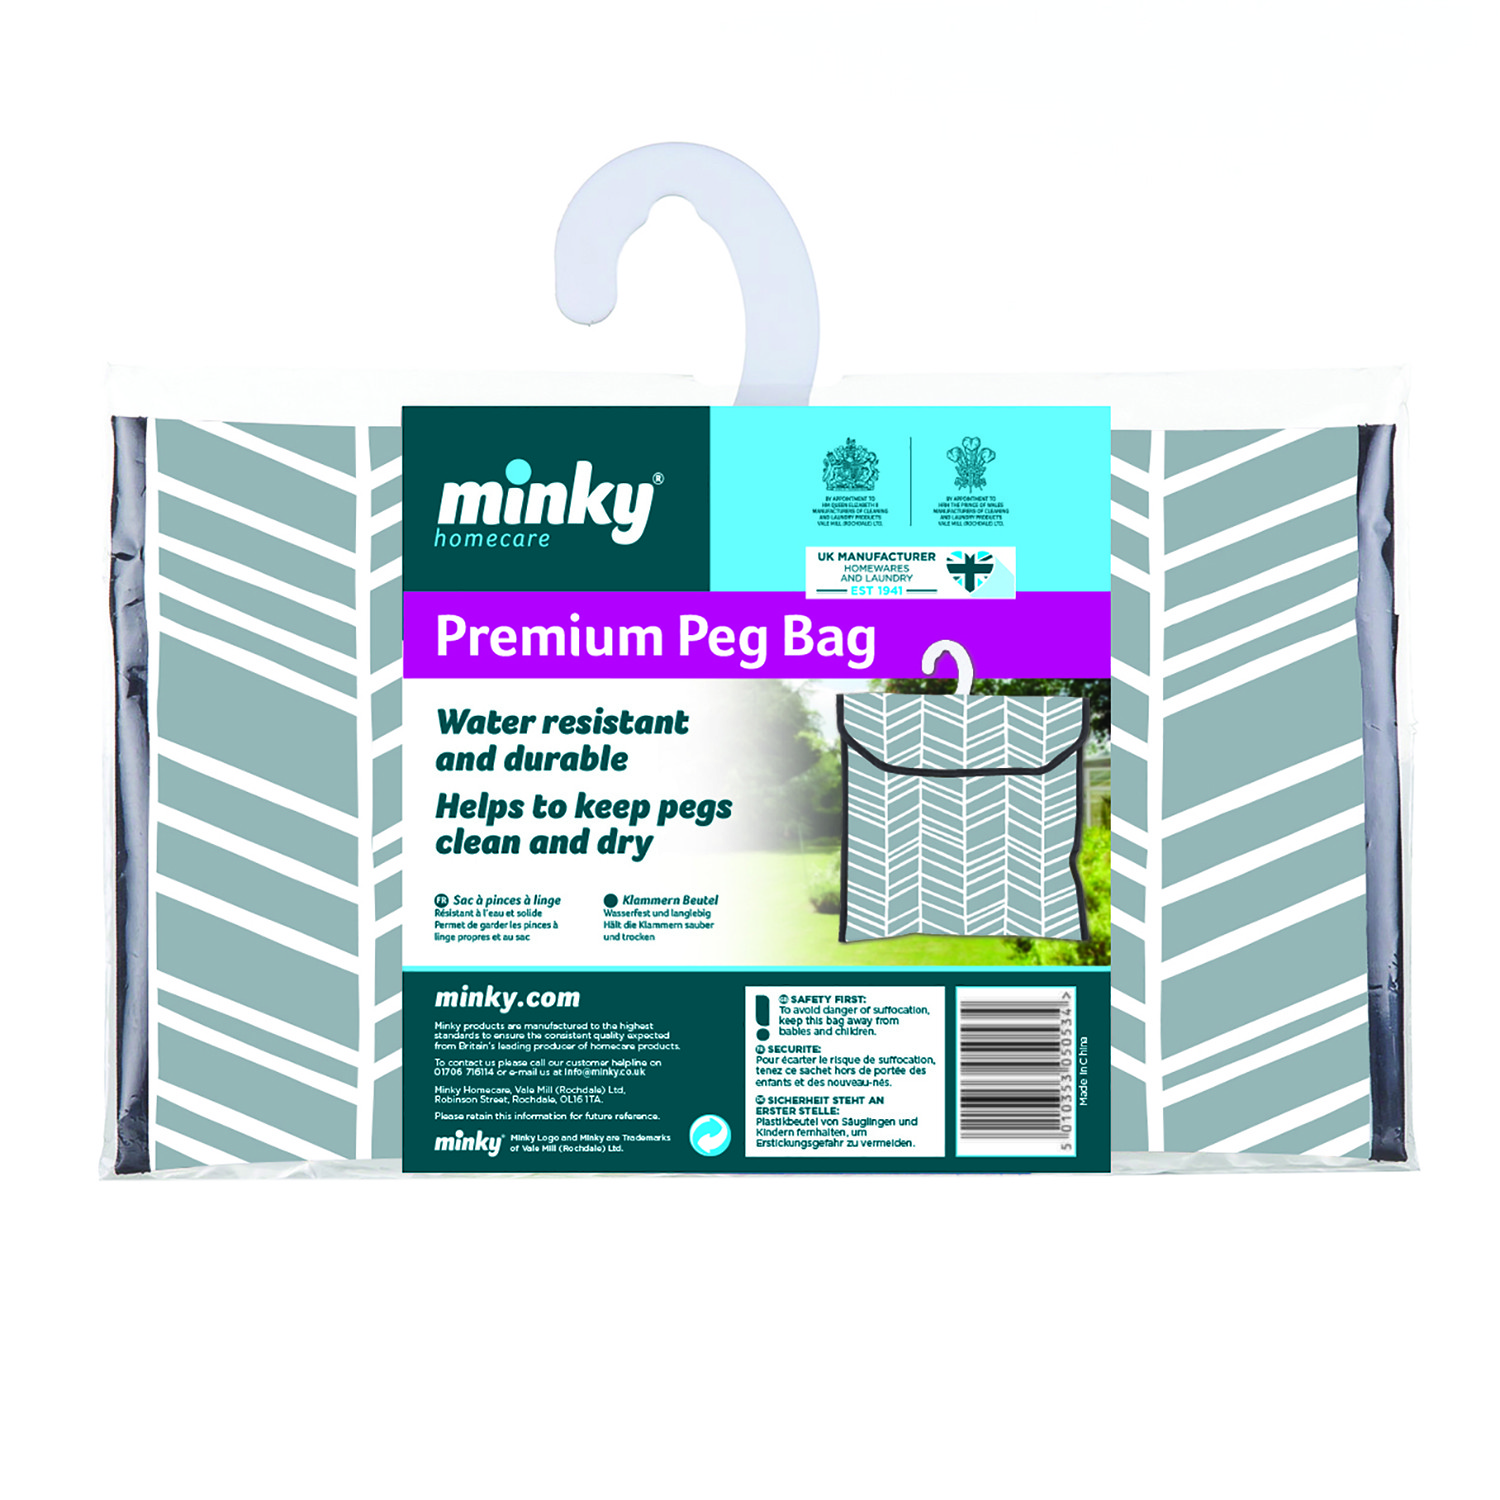 Minky Premium Peg Bag Image 1